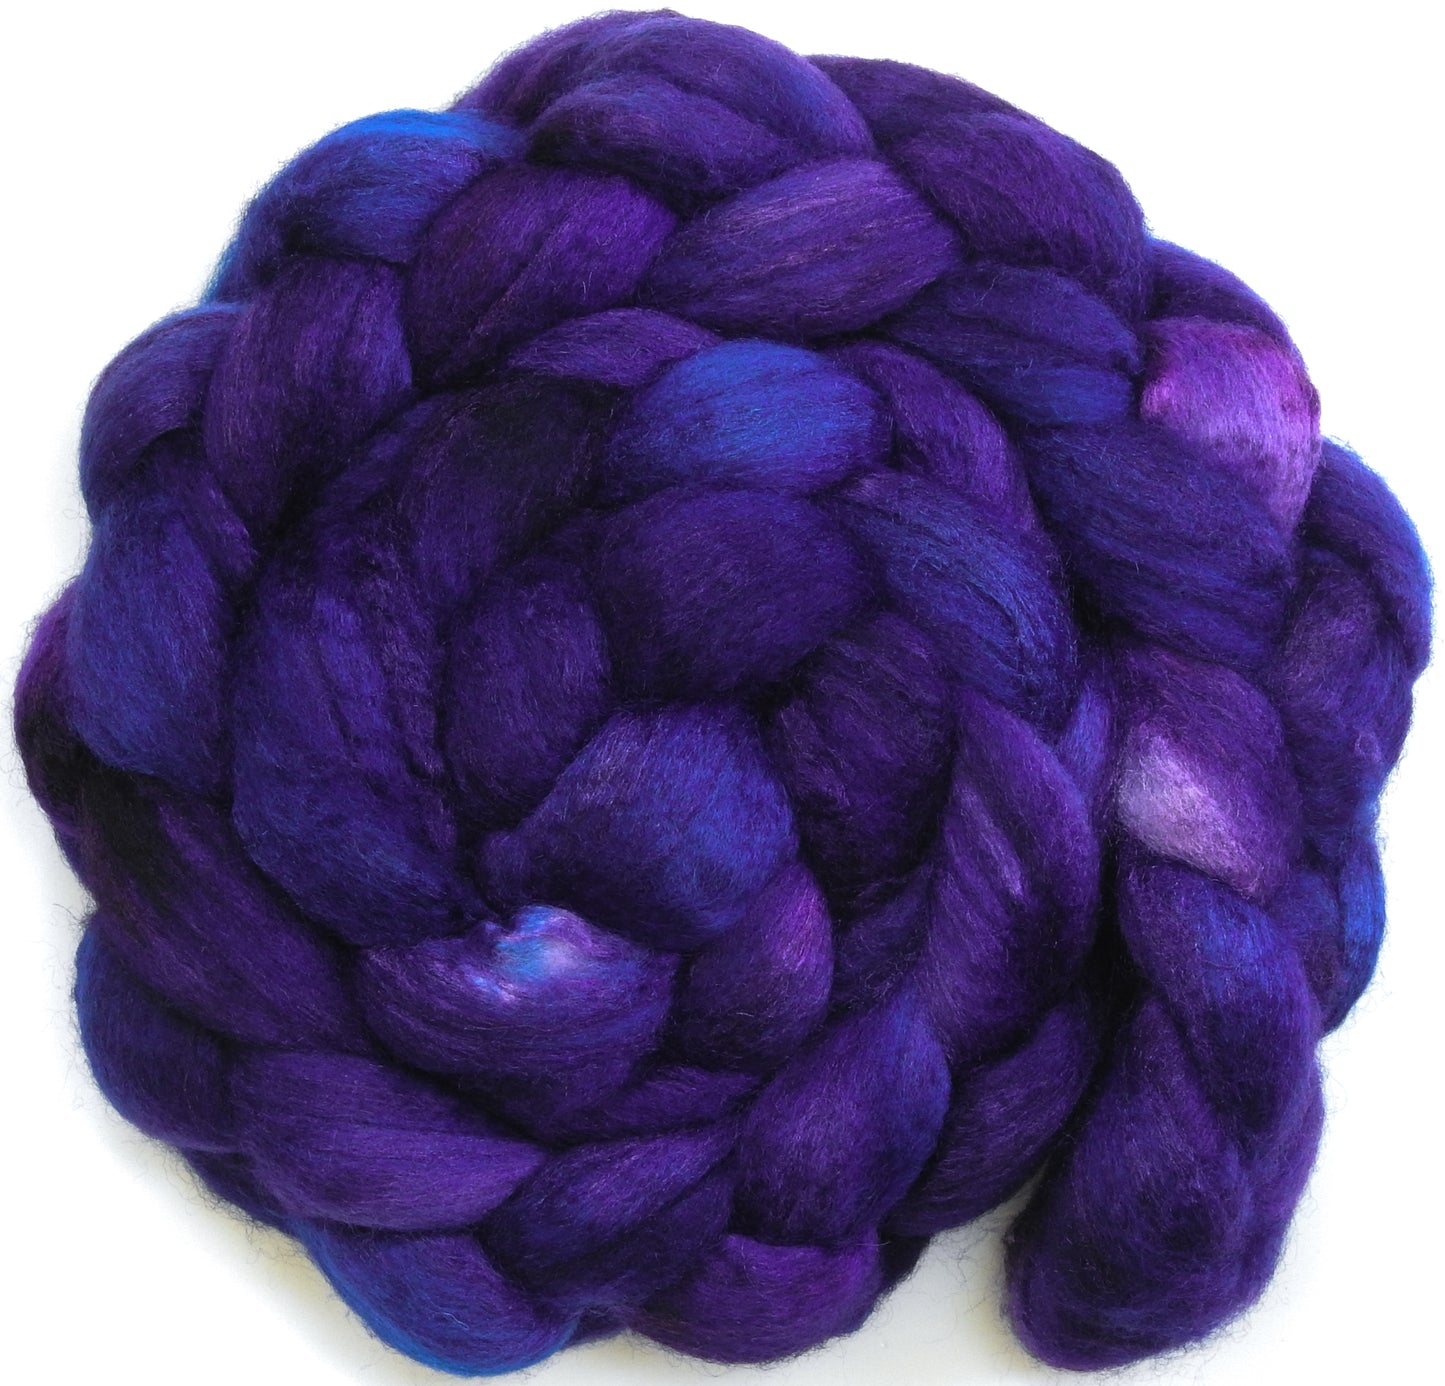 Violet Anemone (5.8 oz) - Blue-faced Leicester/ Tussah Silk (75/25)